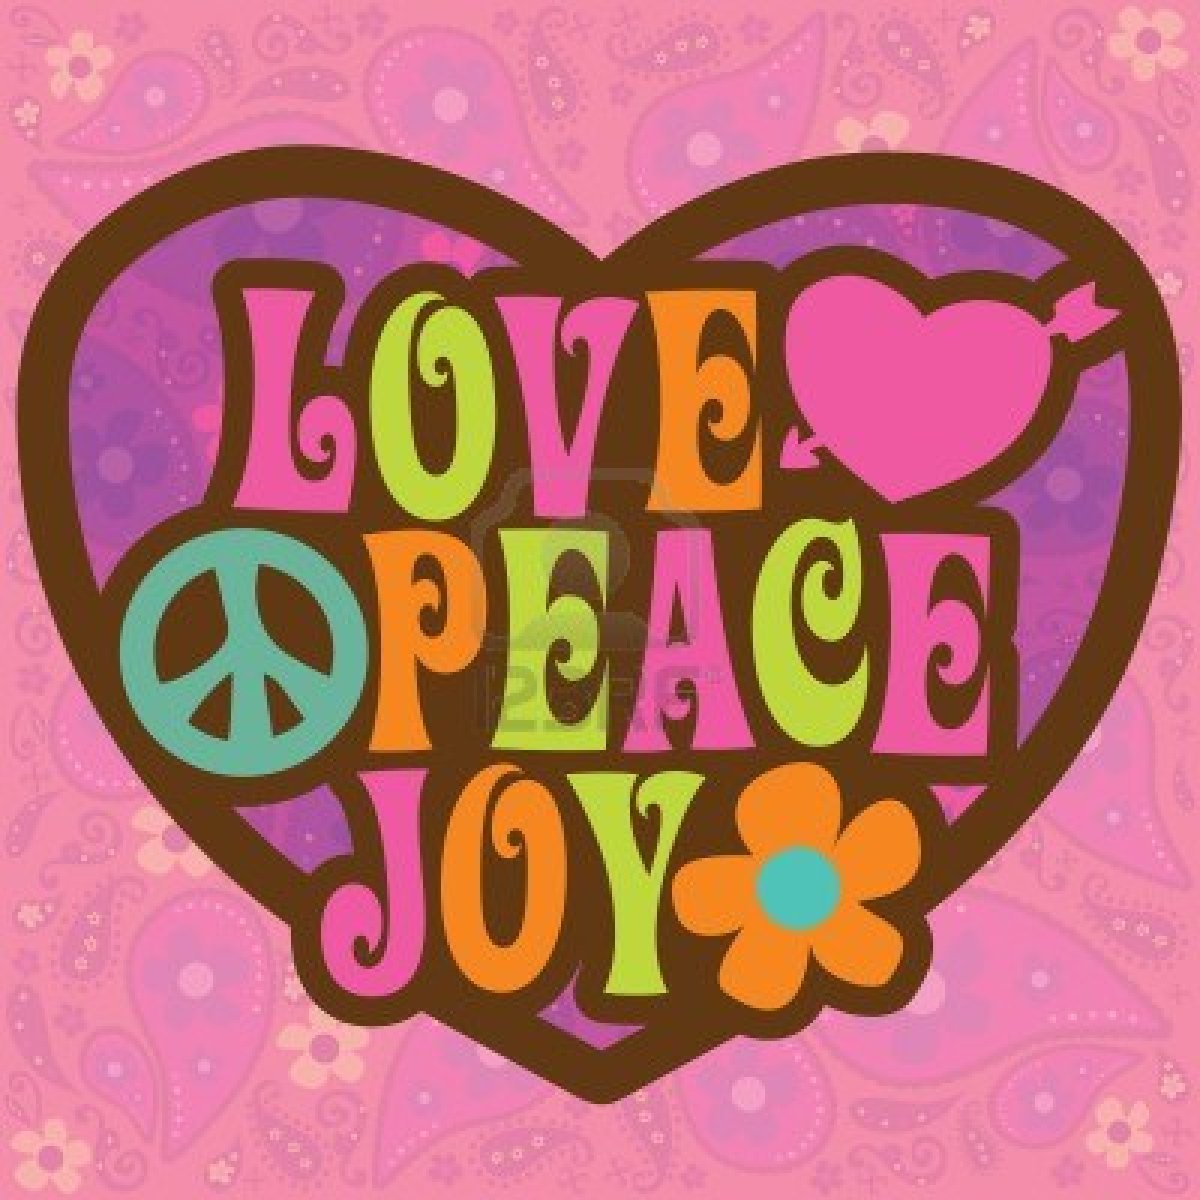 Peace Image Love And Joy Wallpaper Photos